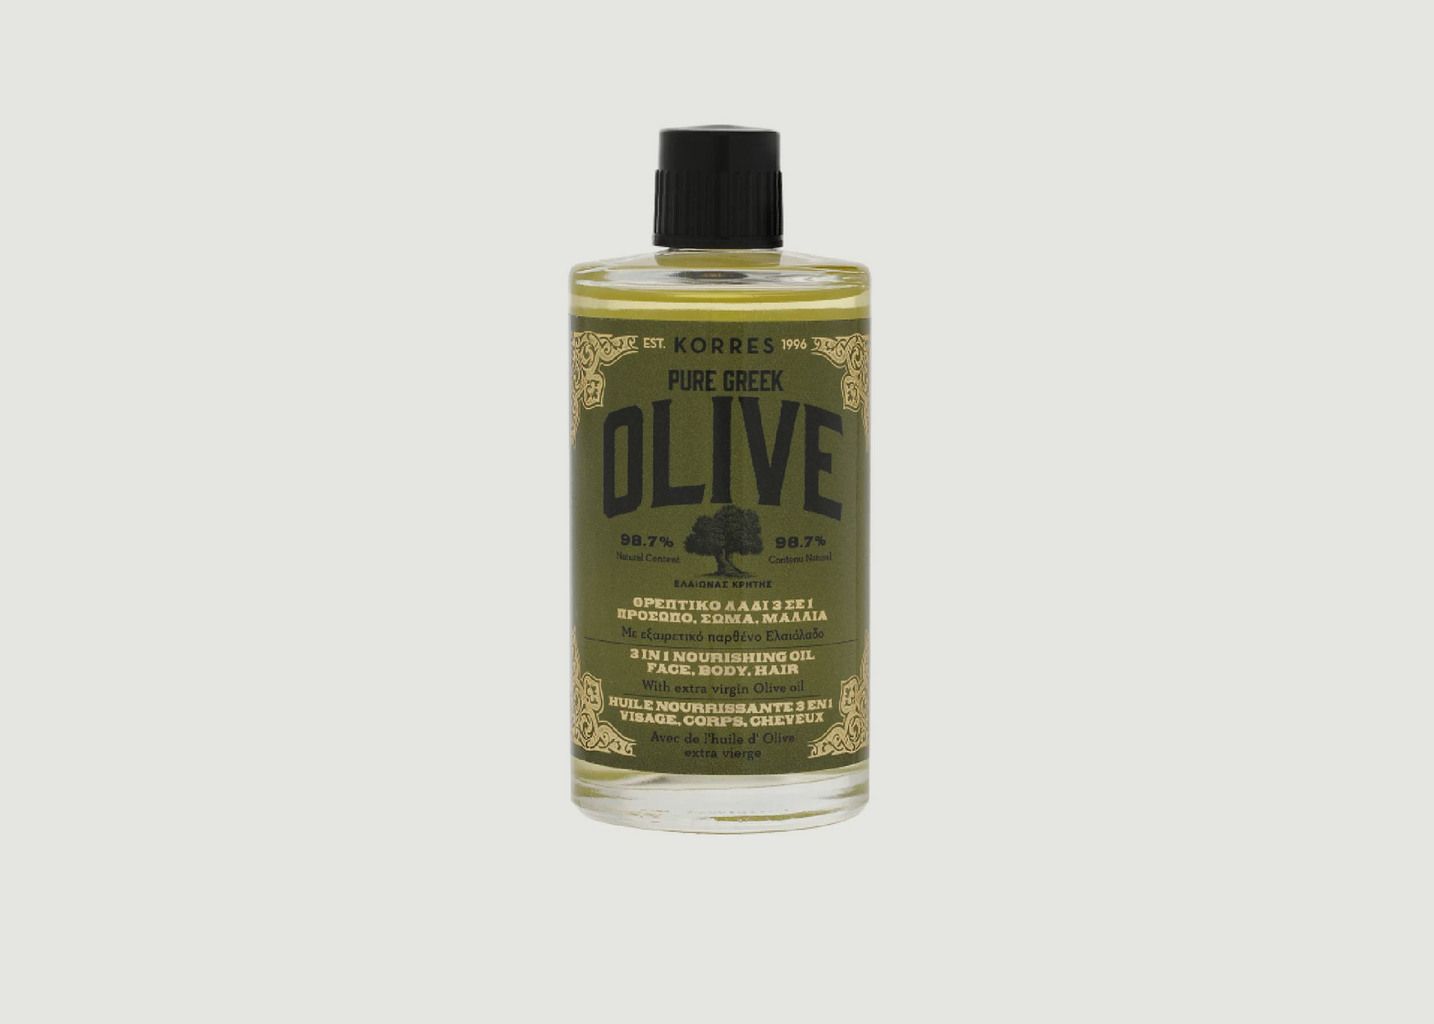 Olive nährendes Öl 3 in 1, 100ml - Korres